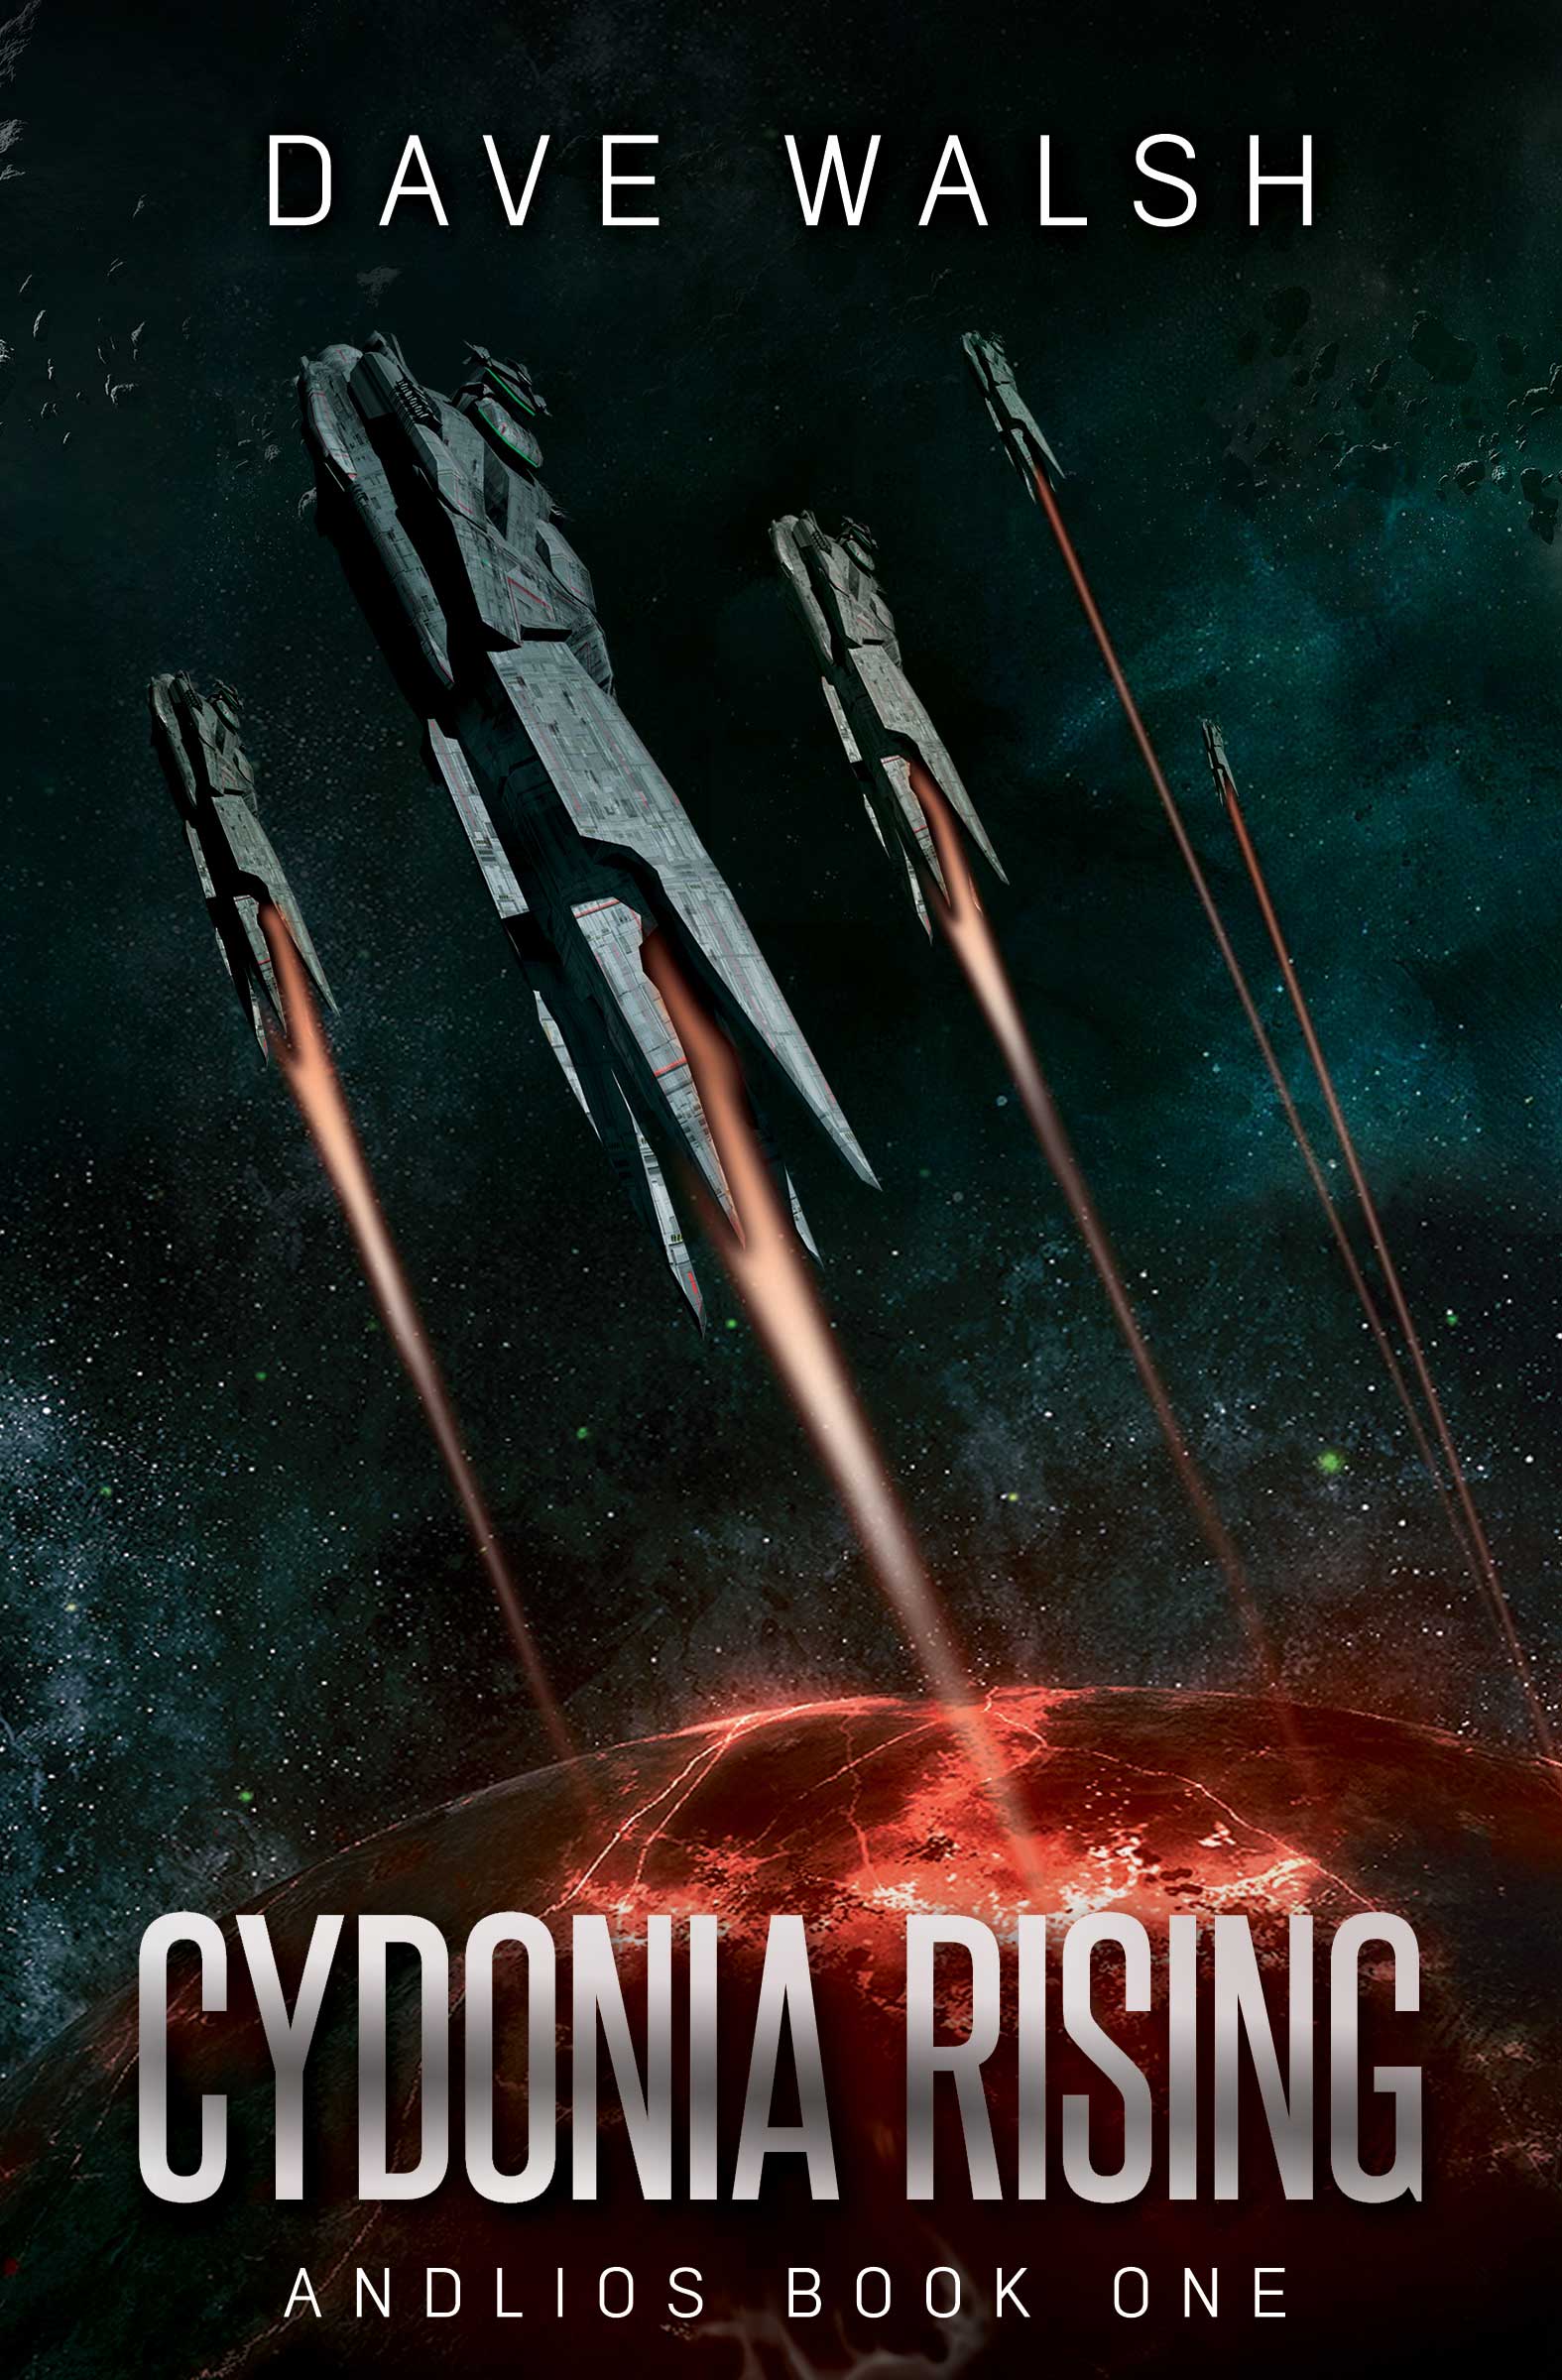 Cover of Dave Walsh's science fiction novel Cydonia Rising